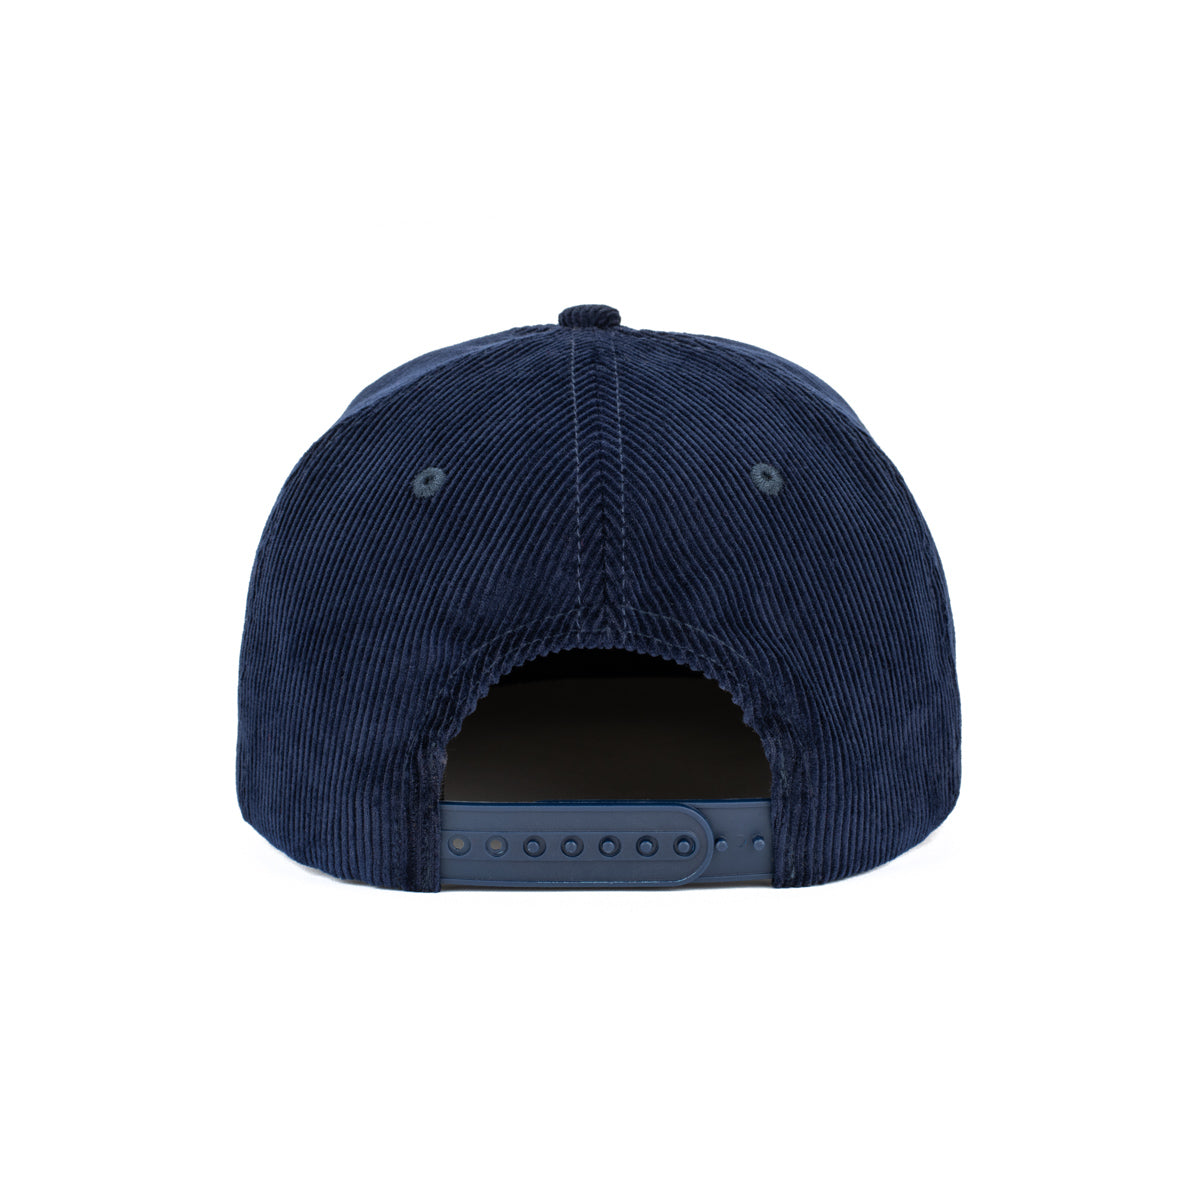 Barstool Sports Corduroy Hat-Hats-Barstool Sports-Navy-One Size-Barstool Sports